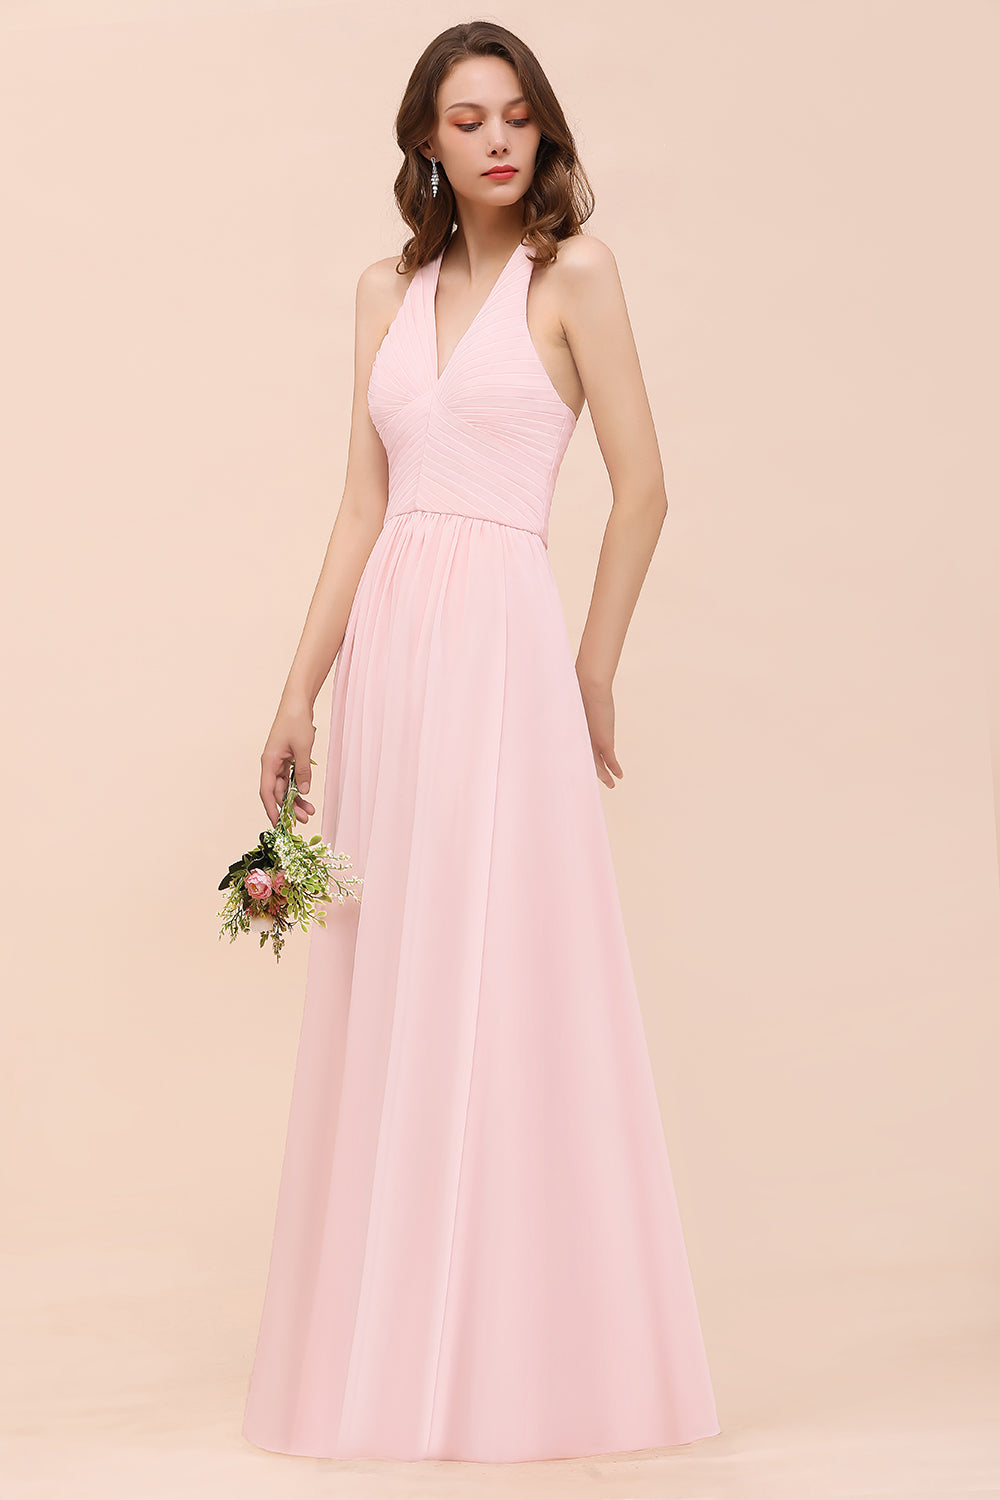 Chic V-Neck Blushing Pink Chiffon Affordable Bridesmaid Dress with Ruffle